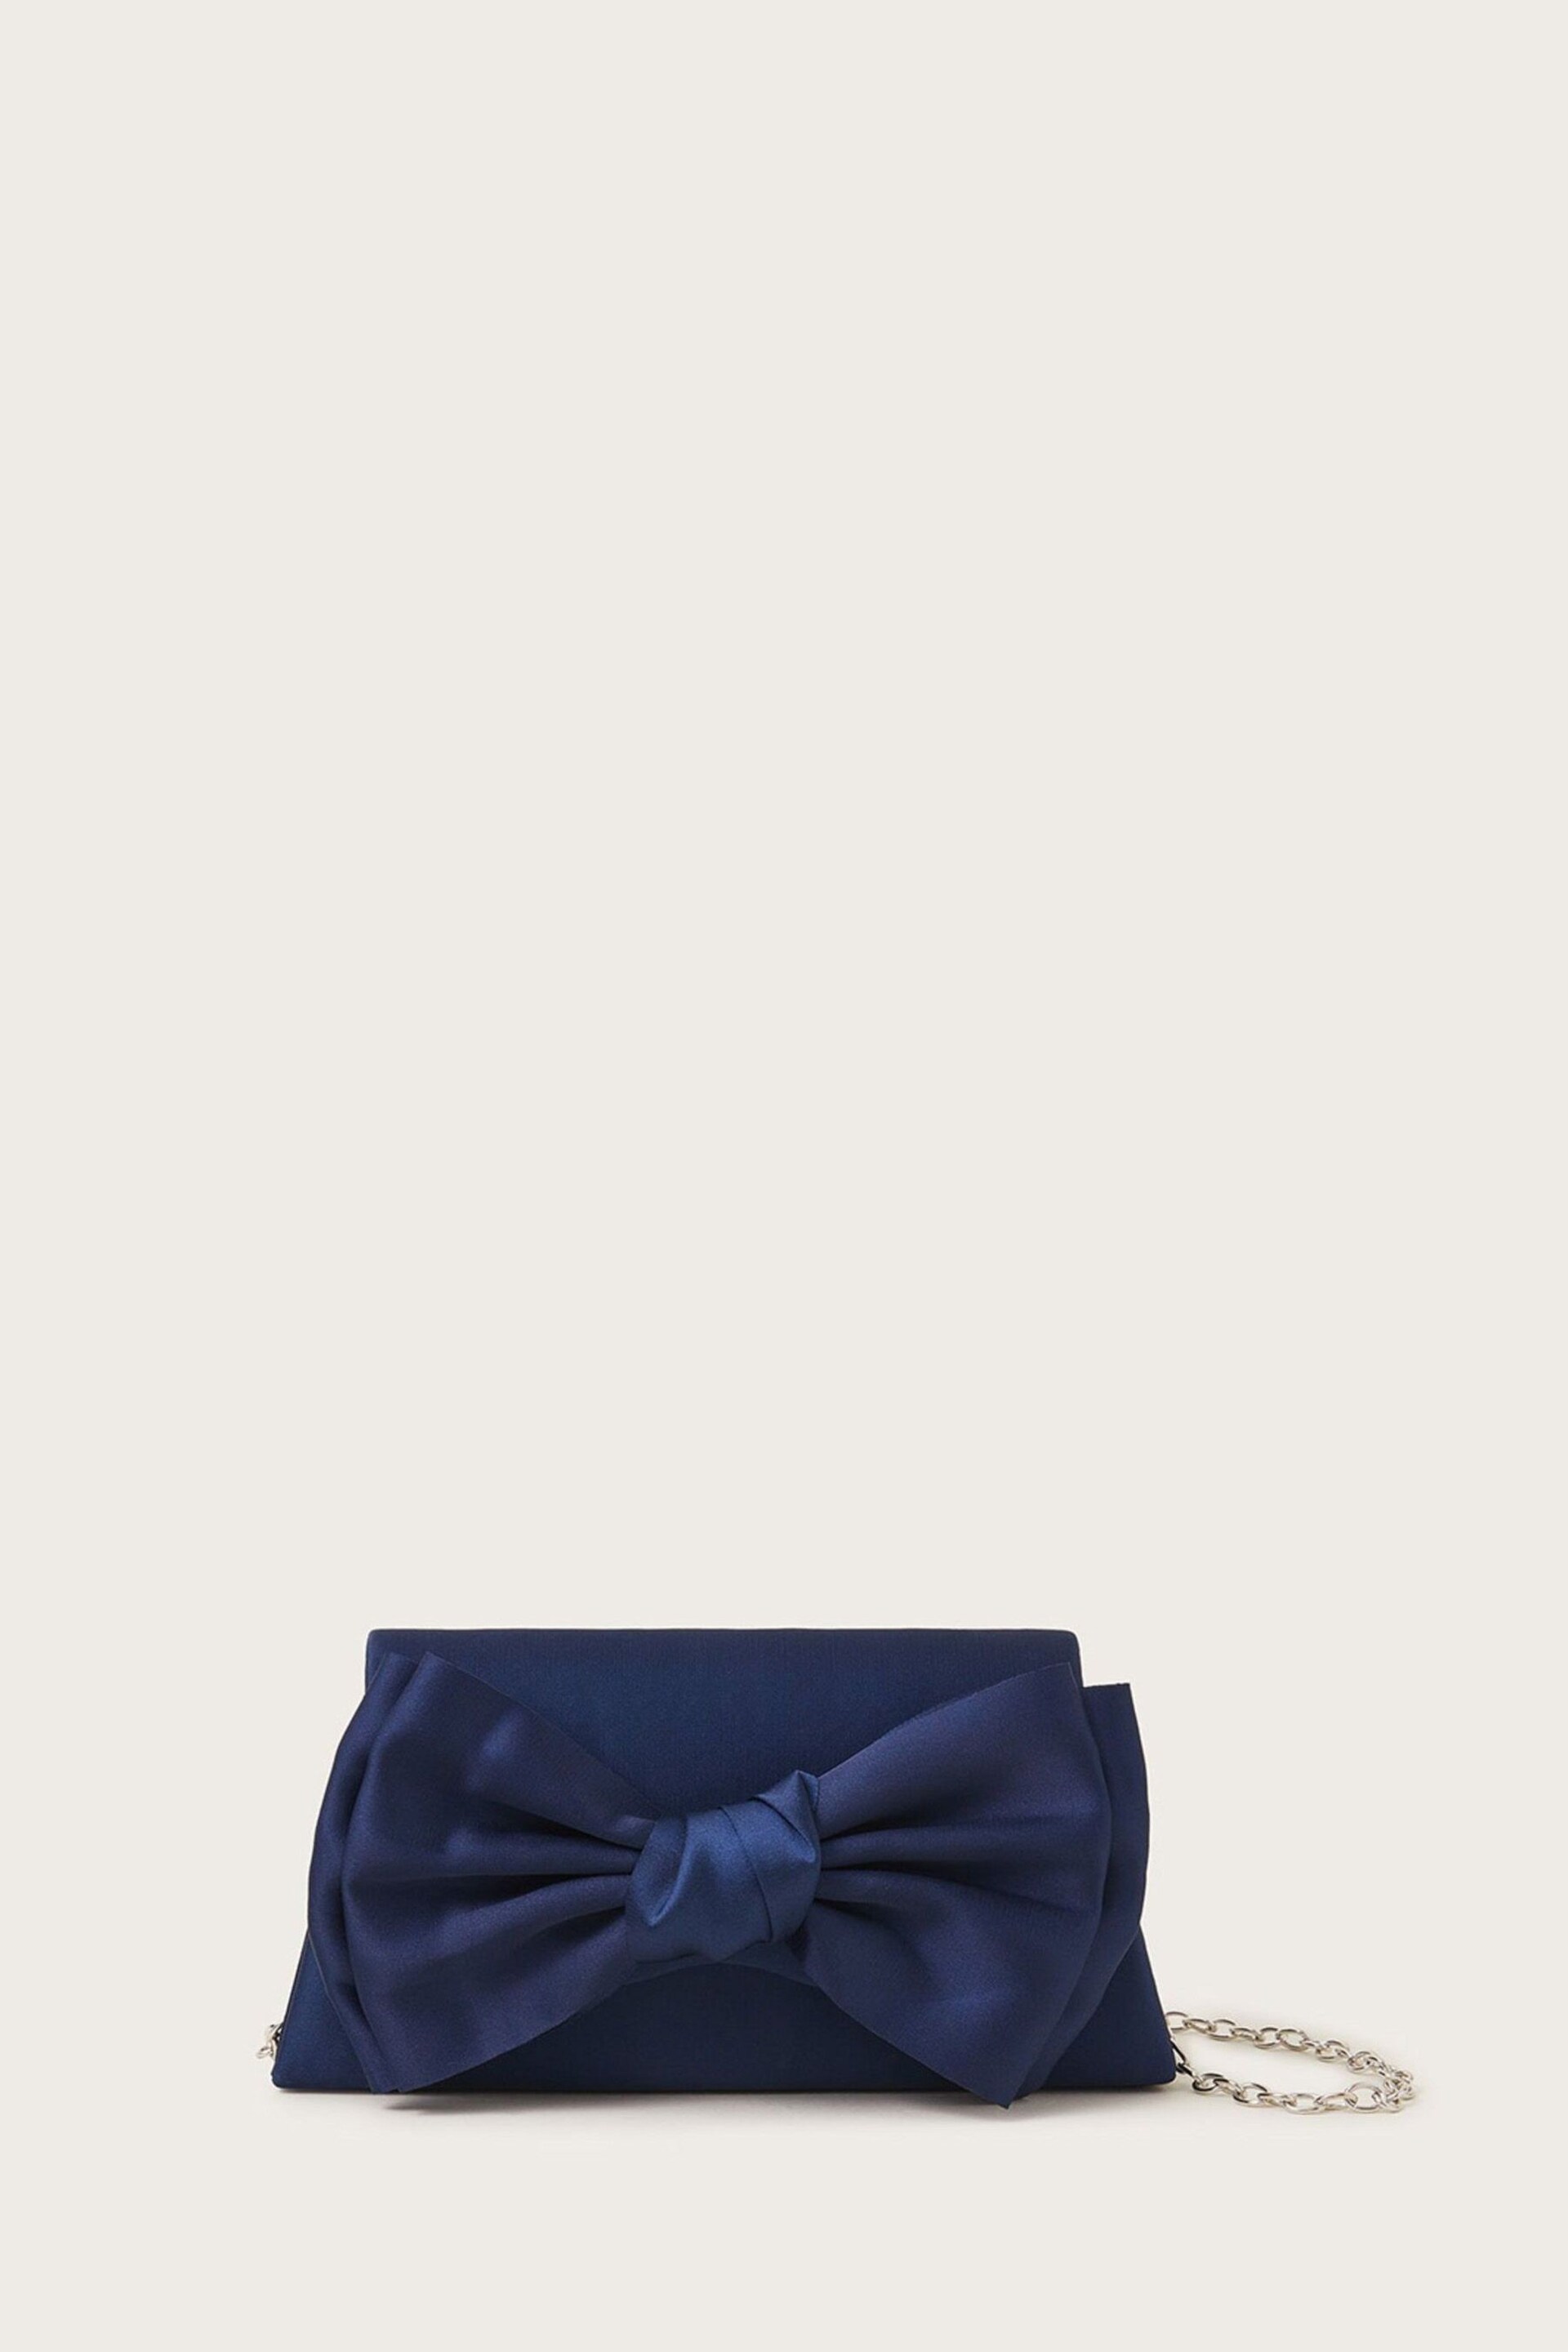 Monsoon Blue Bridesmaid Bow Bag - Image 1 of 3